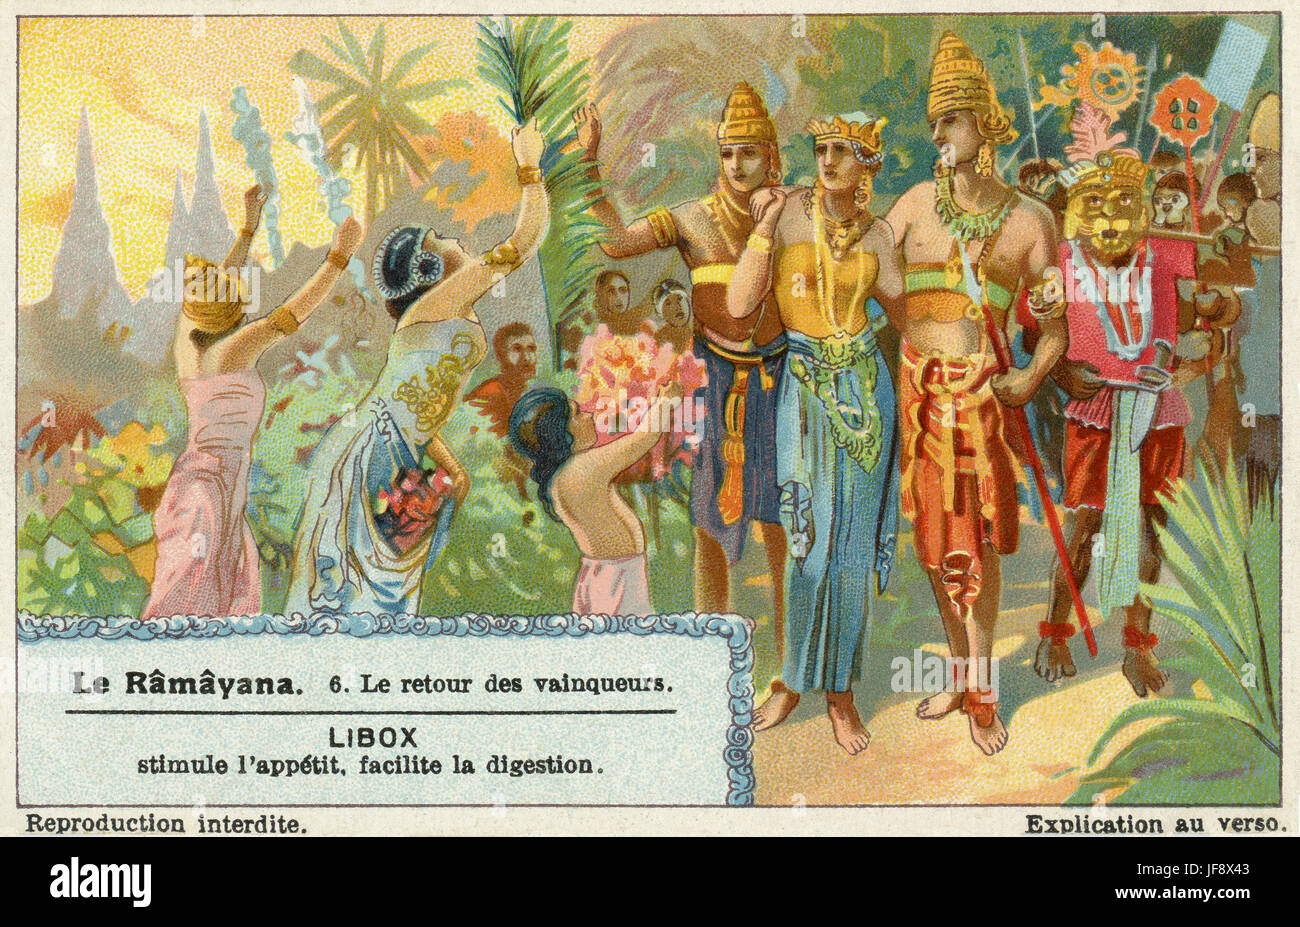 Ramayana, Sanskrit epic poem ascribed to Valmiki. Return of the victors, Rama, Hanuman and Sita. Liebig collectors' card 1931 Stock Photo